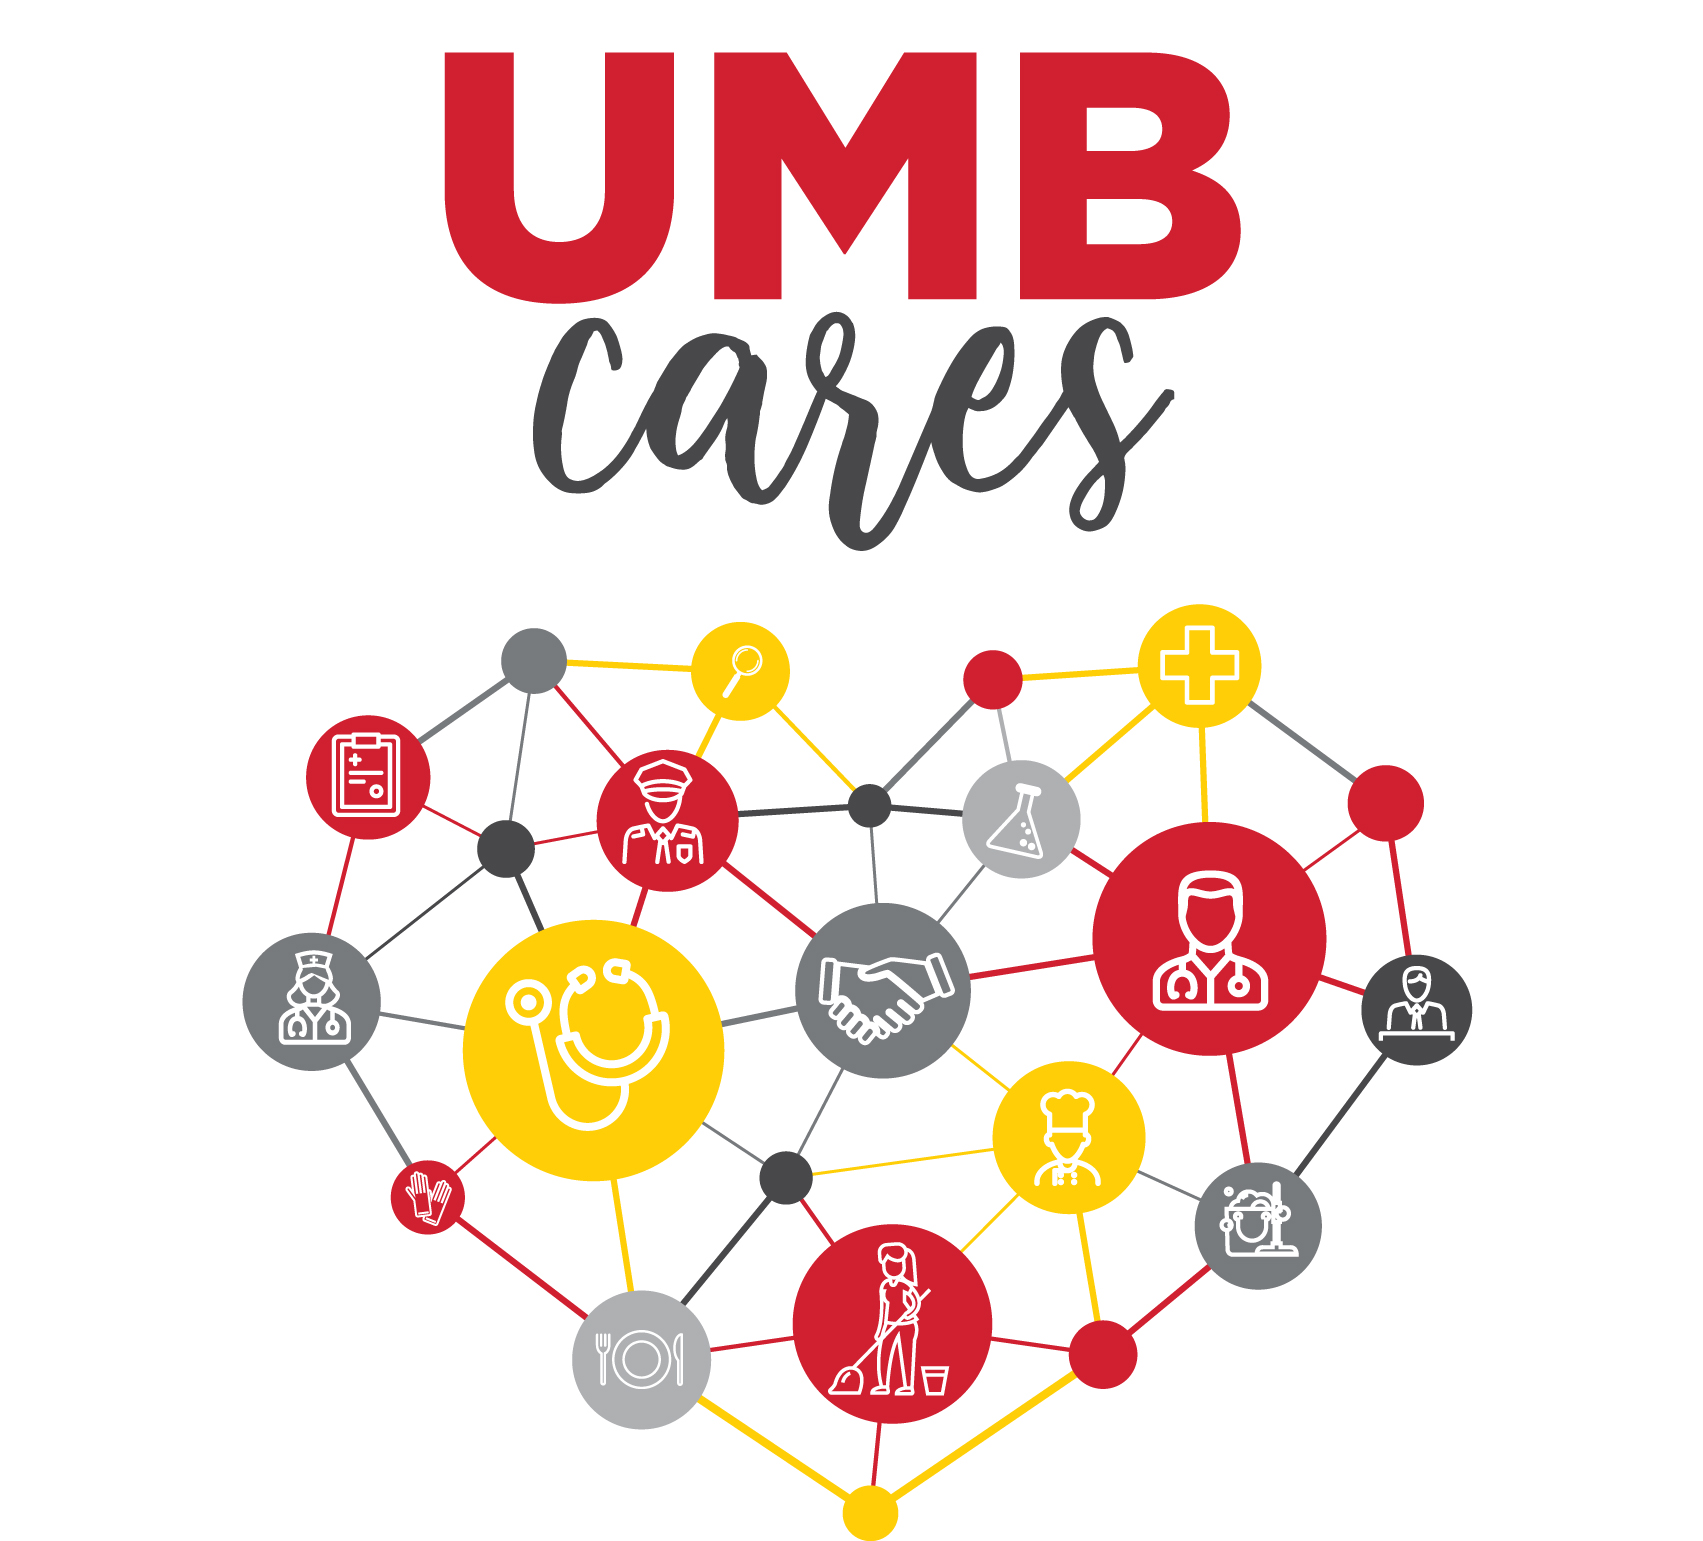 UMB cares